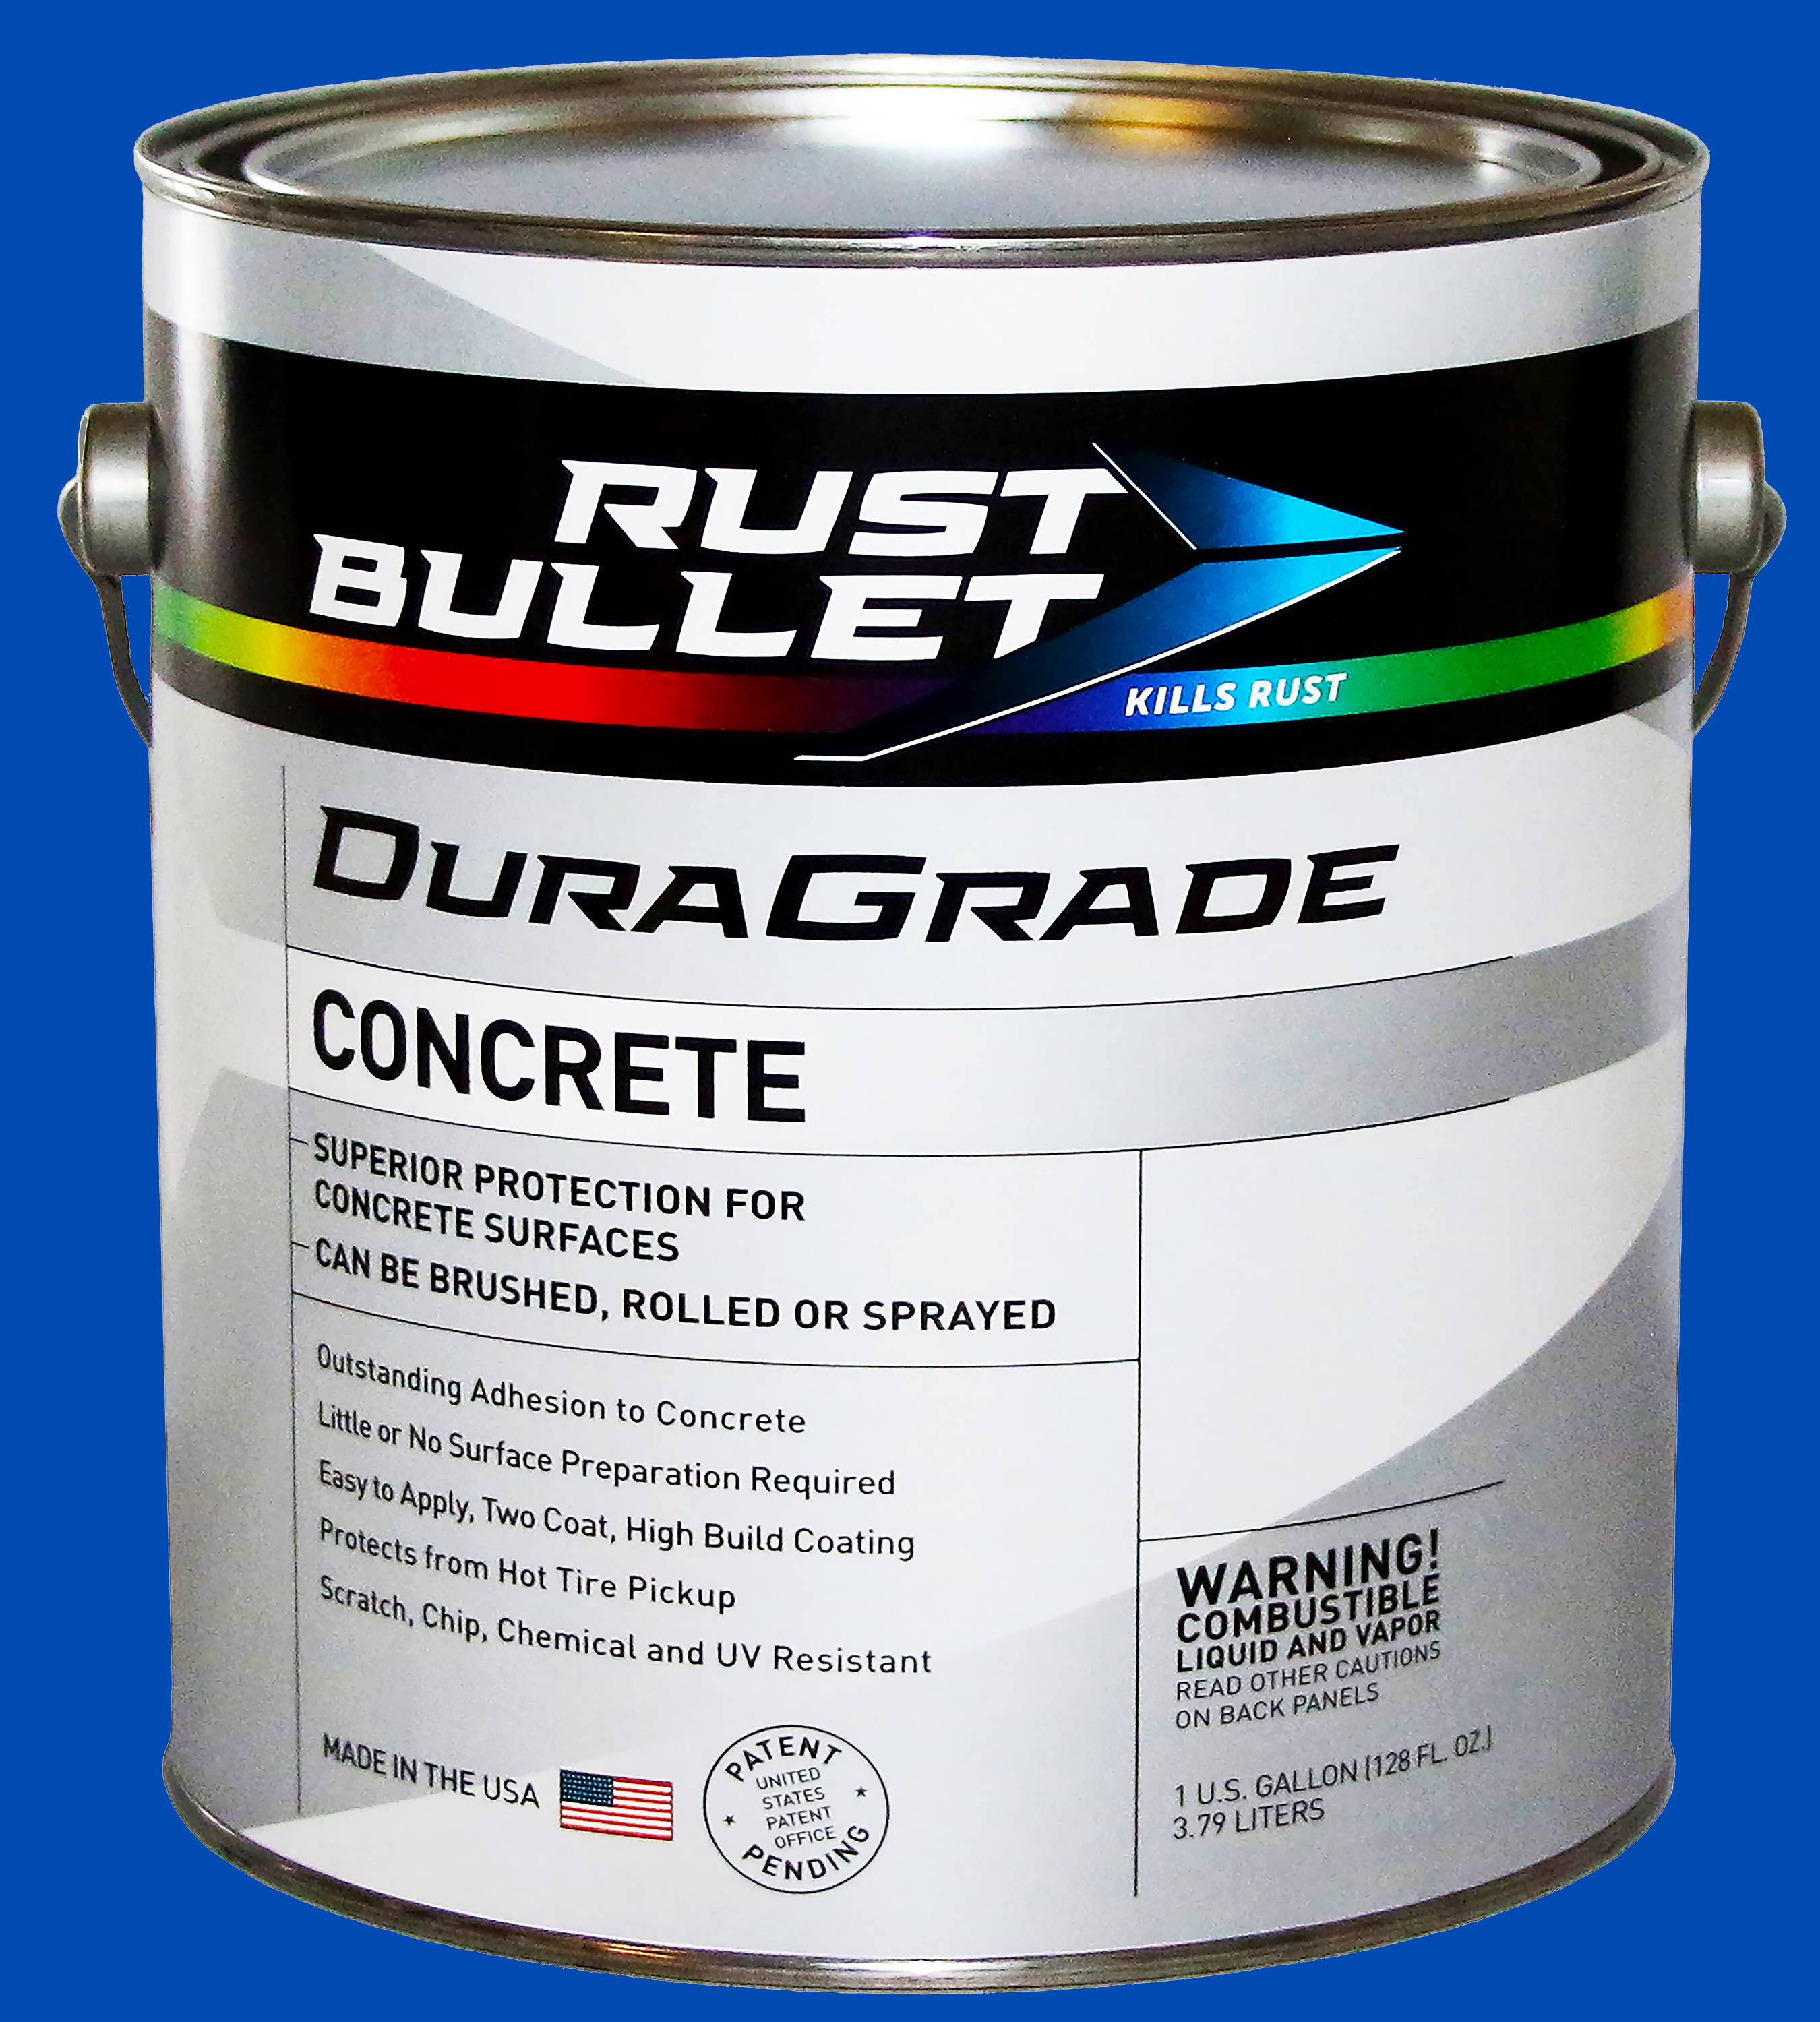 Rust-Oleum Latex Aluminum Primer - Gray, 32 fl oz - Kroger